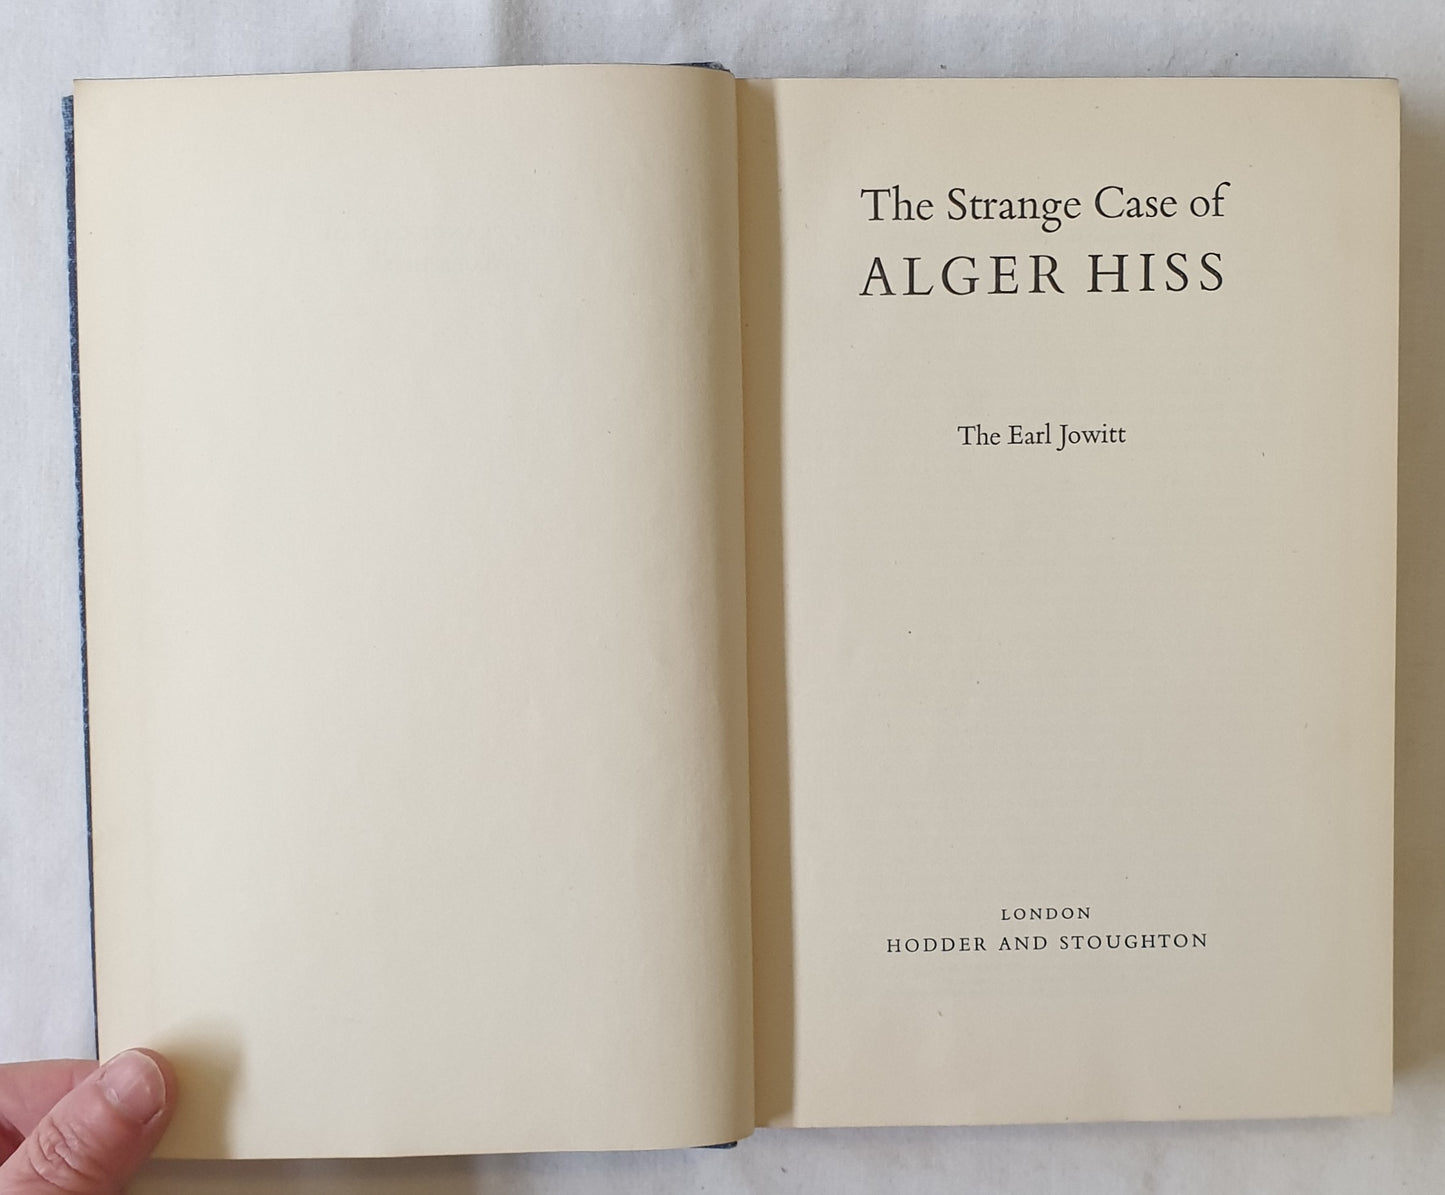 The Strange Case of Alger Hiss by The Earl Jowitt